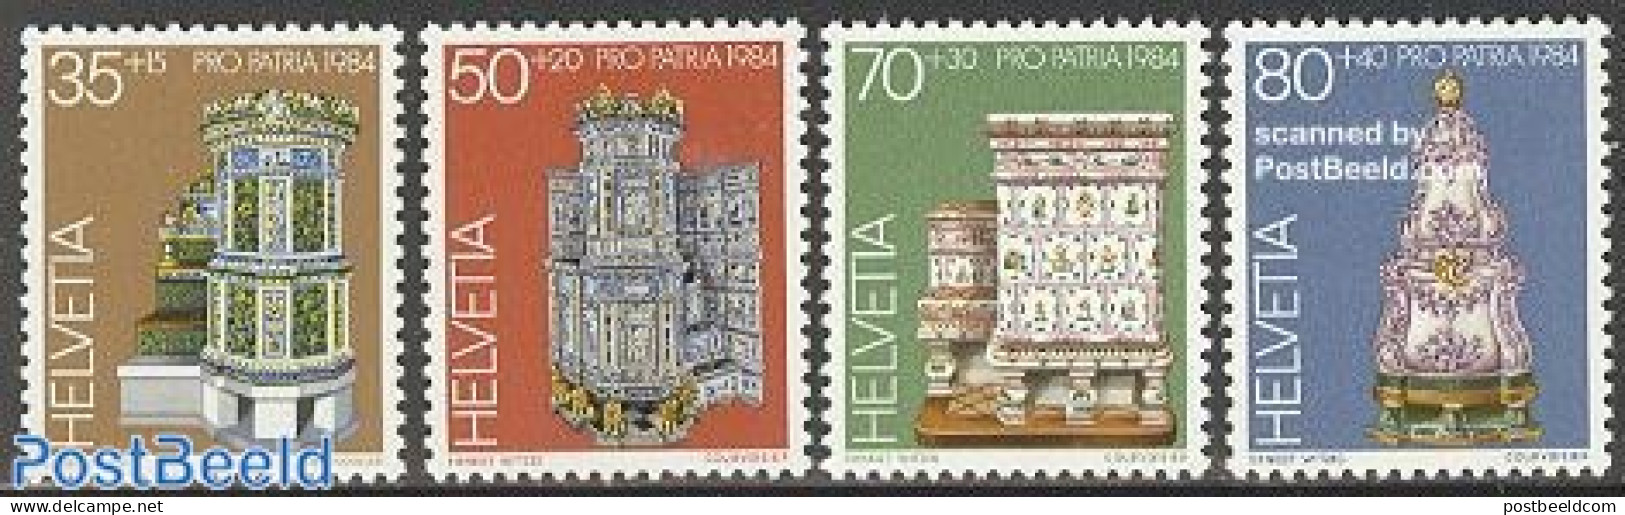 Switzerland 1984 Pro Patria 4v, Mint NH, Art - Art & Antique Objects - Unused Stamps